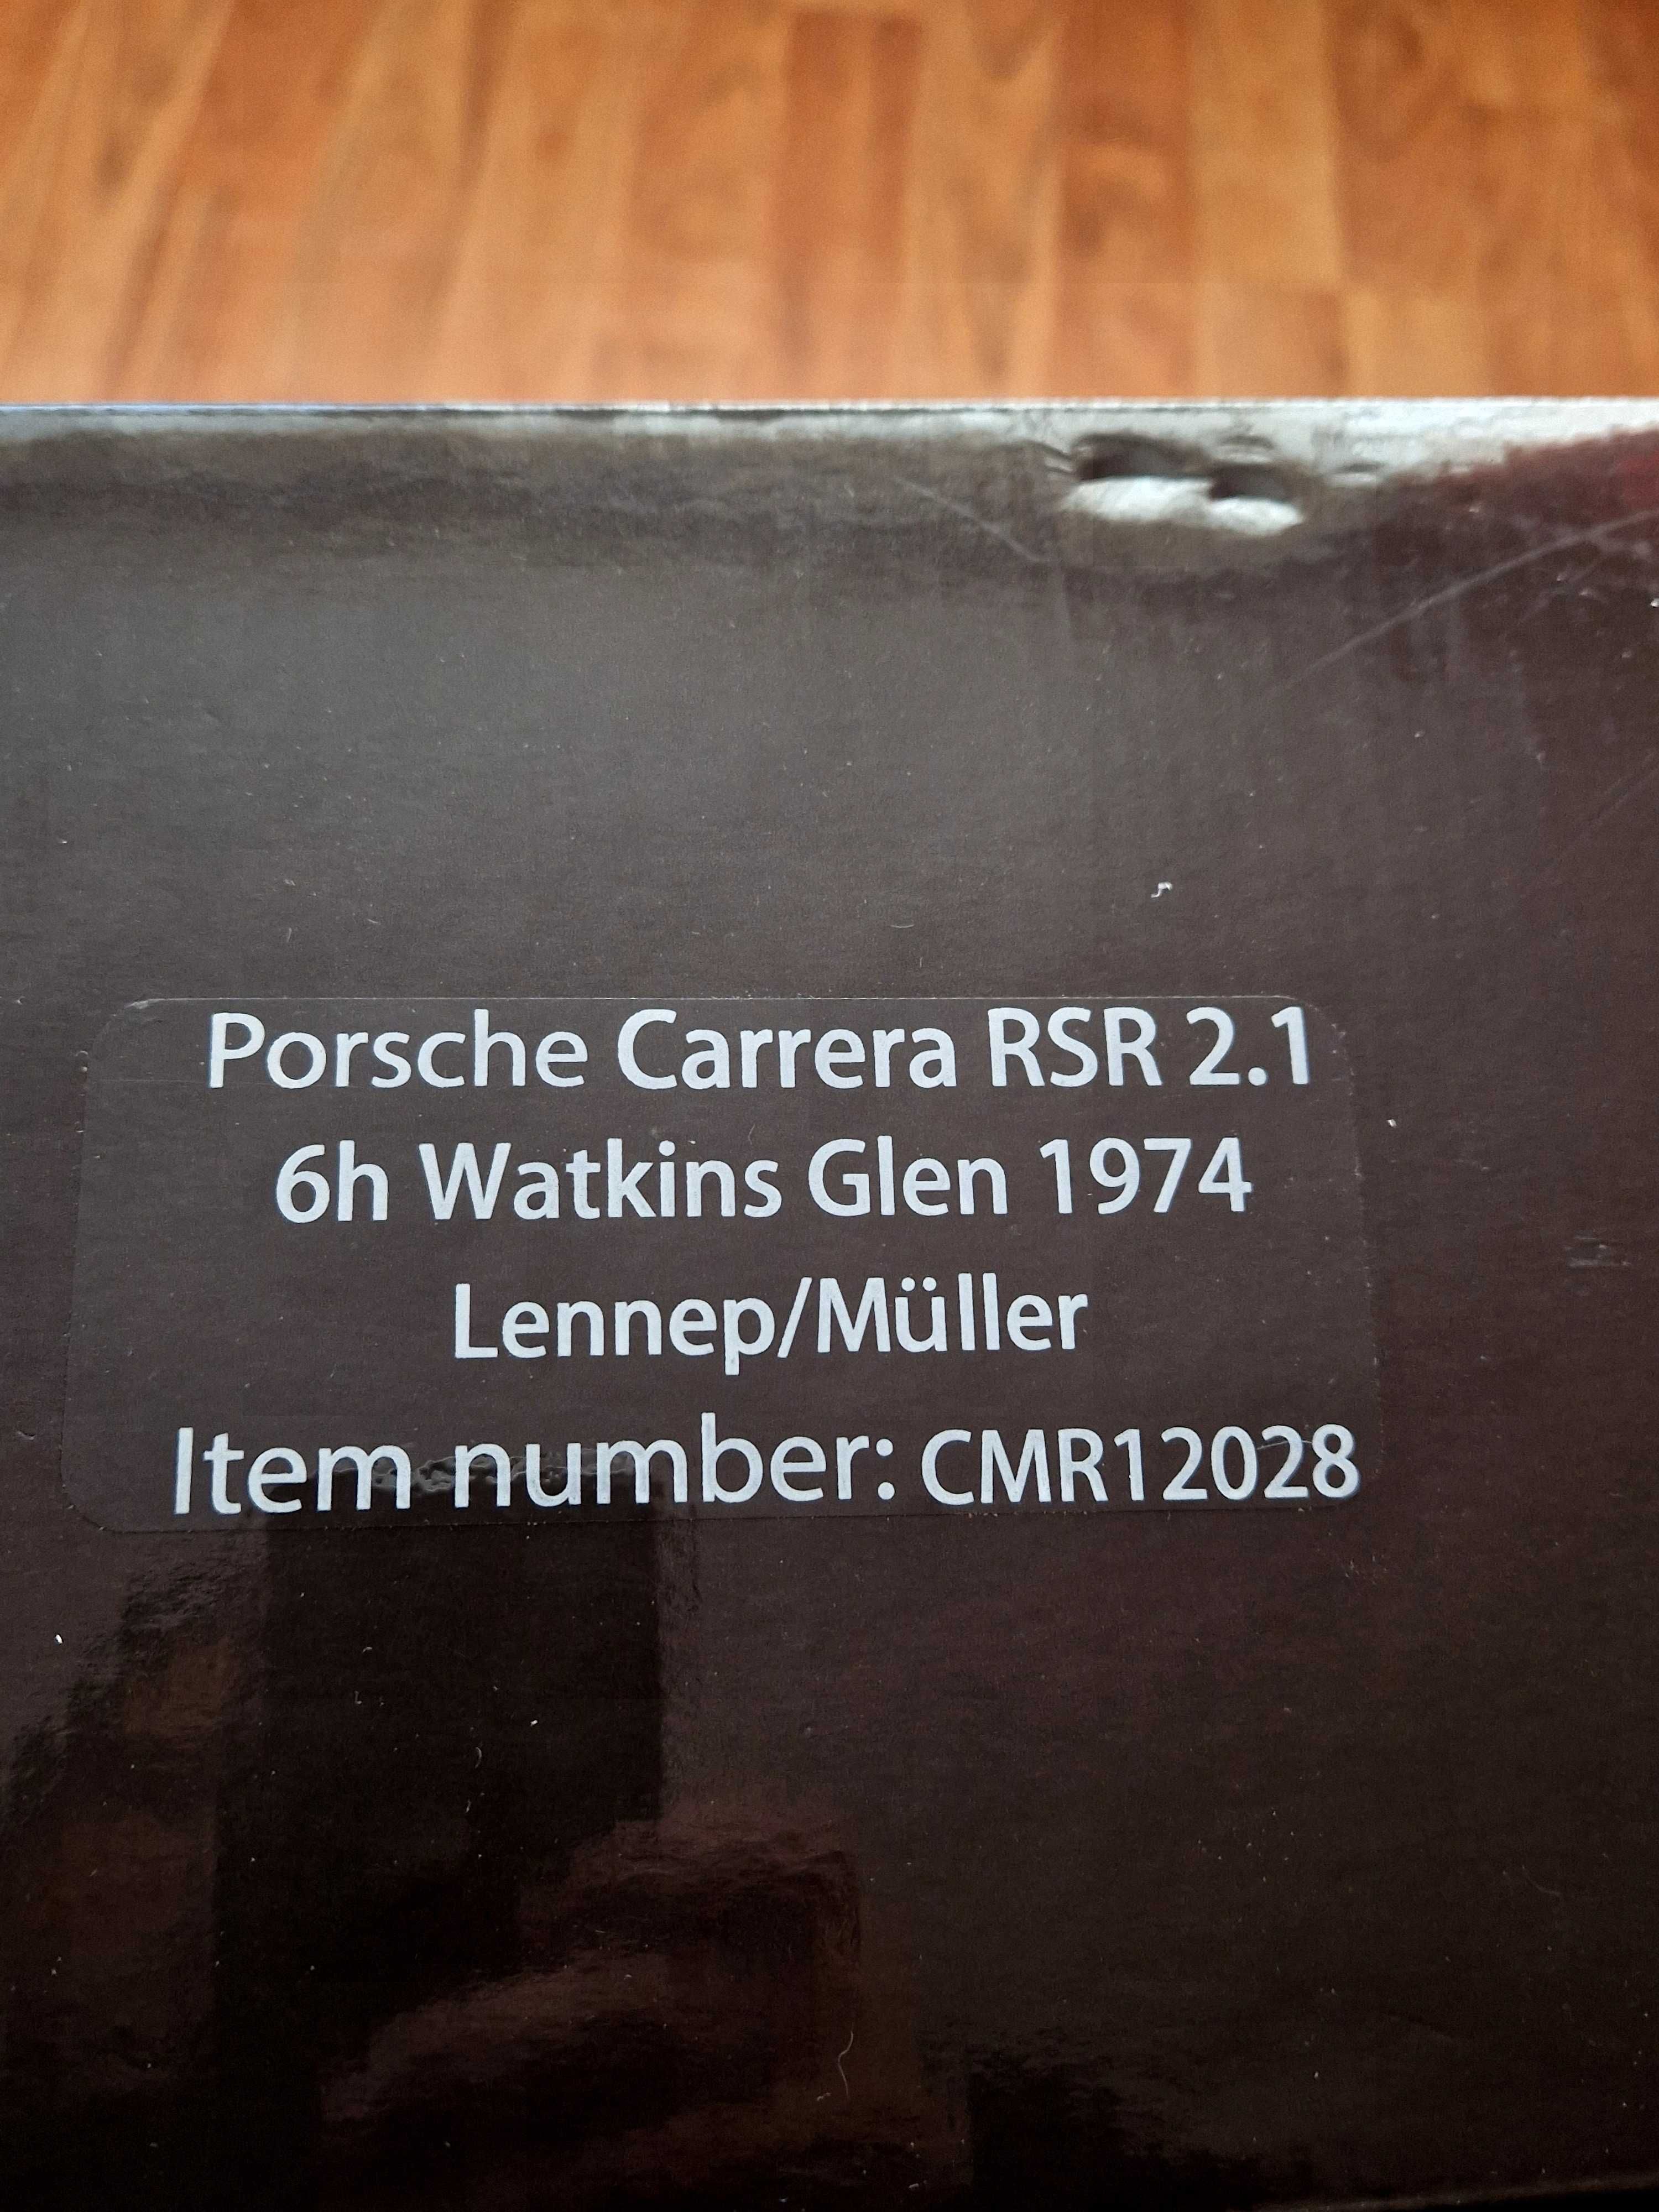 Porsche CarreraRSR 2.1 Macheta 1/12